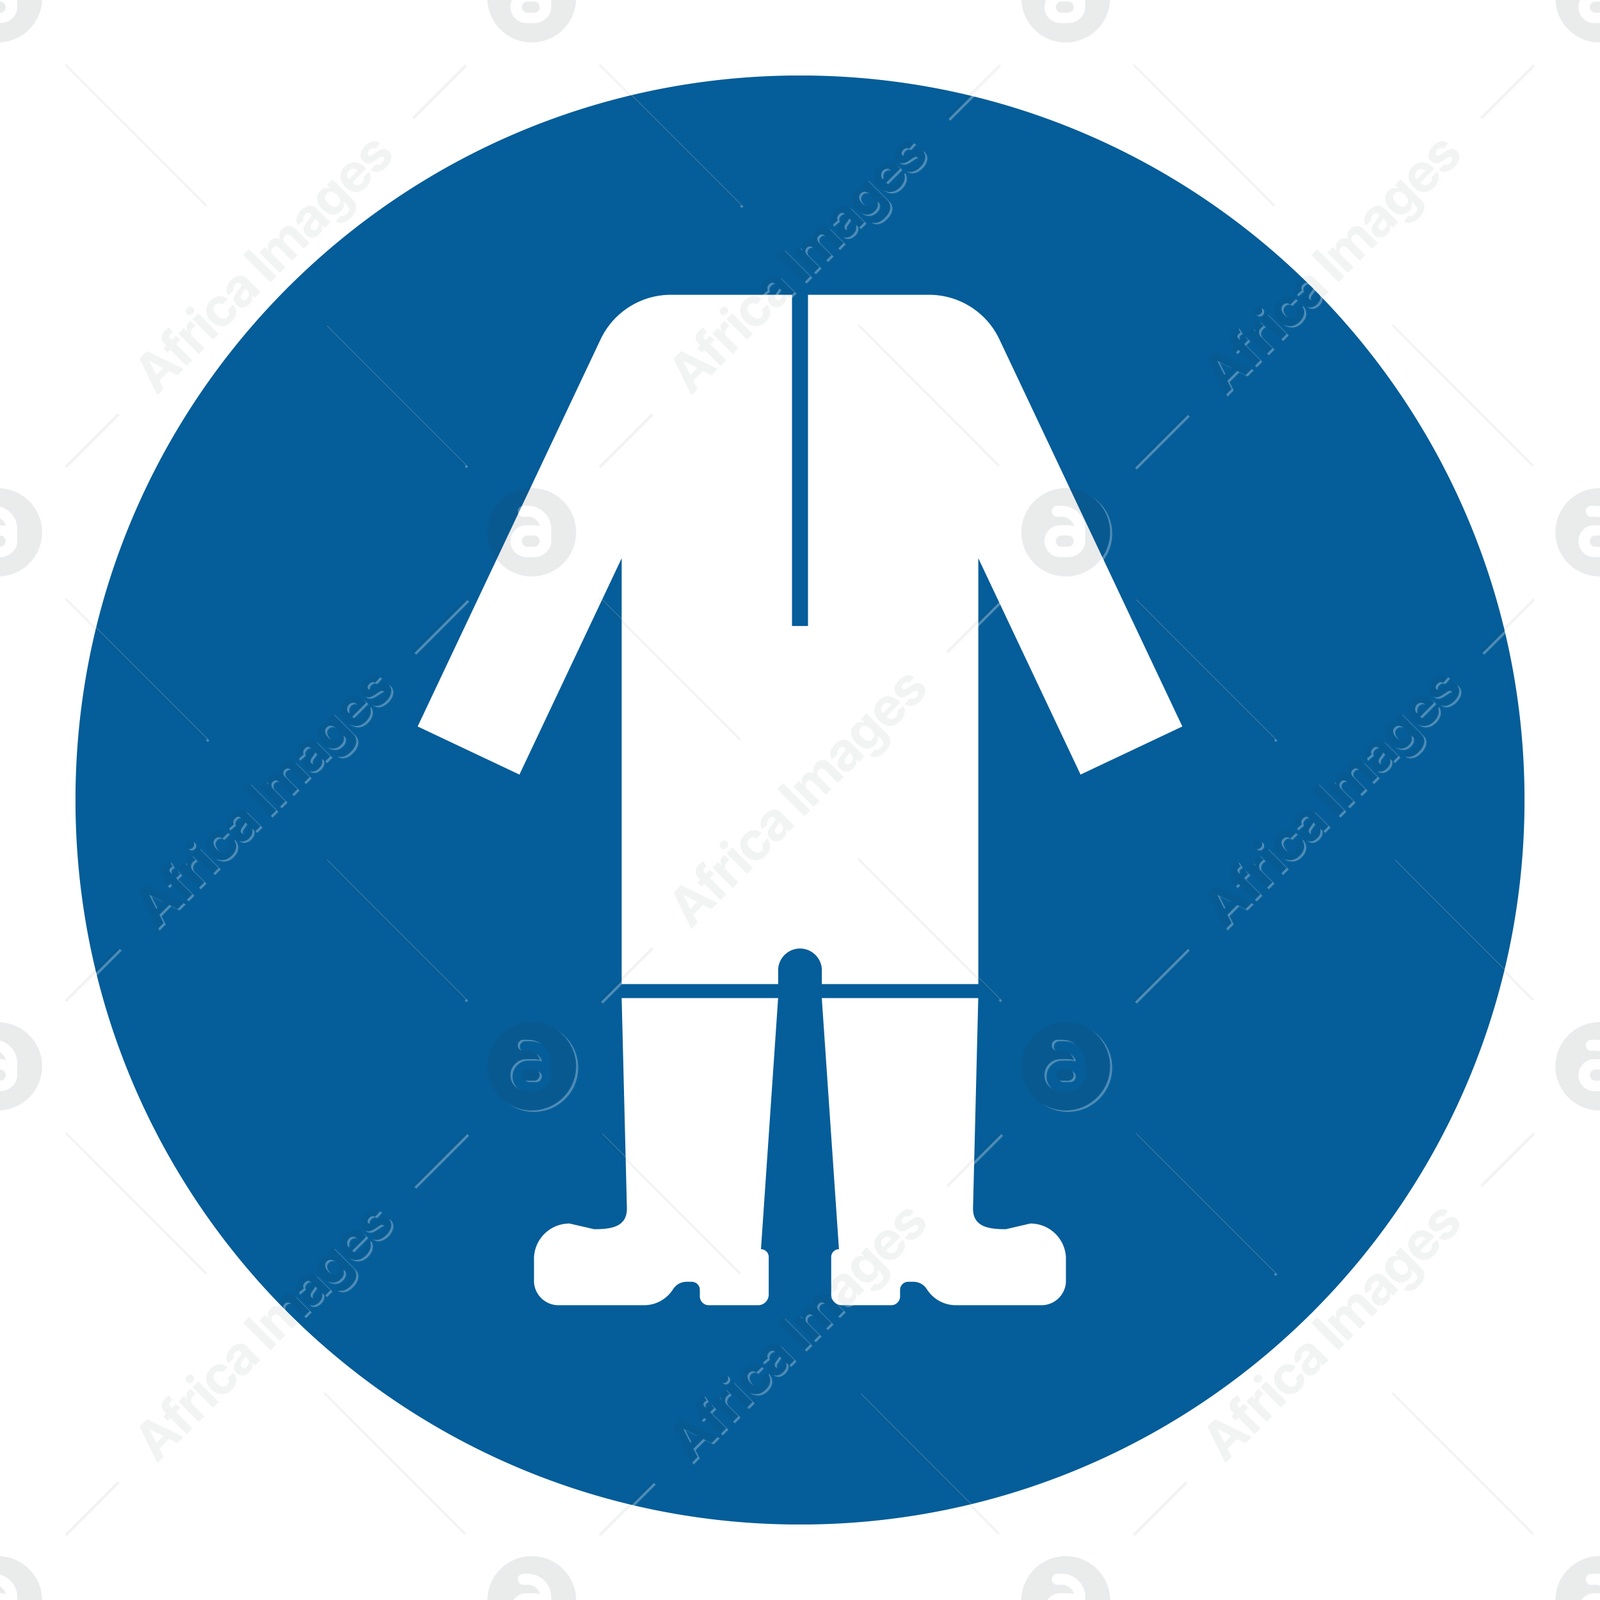 Image of International Maritime Organization (IMO) sign, illustration. Protective suit symbol